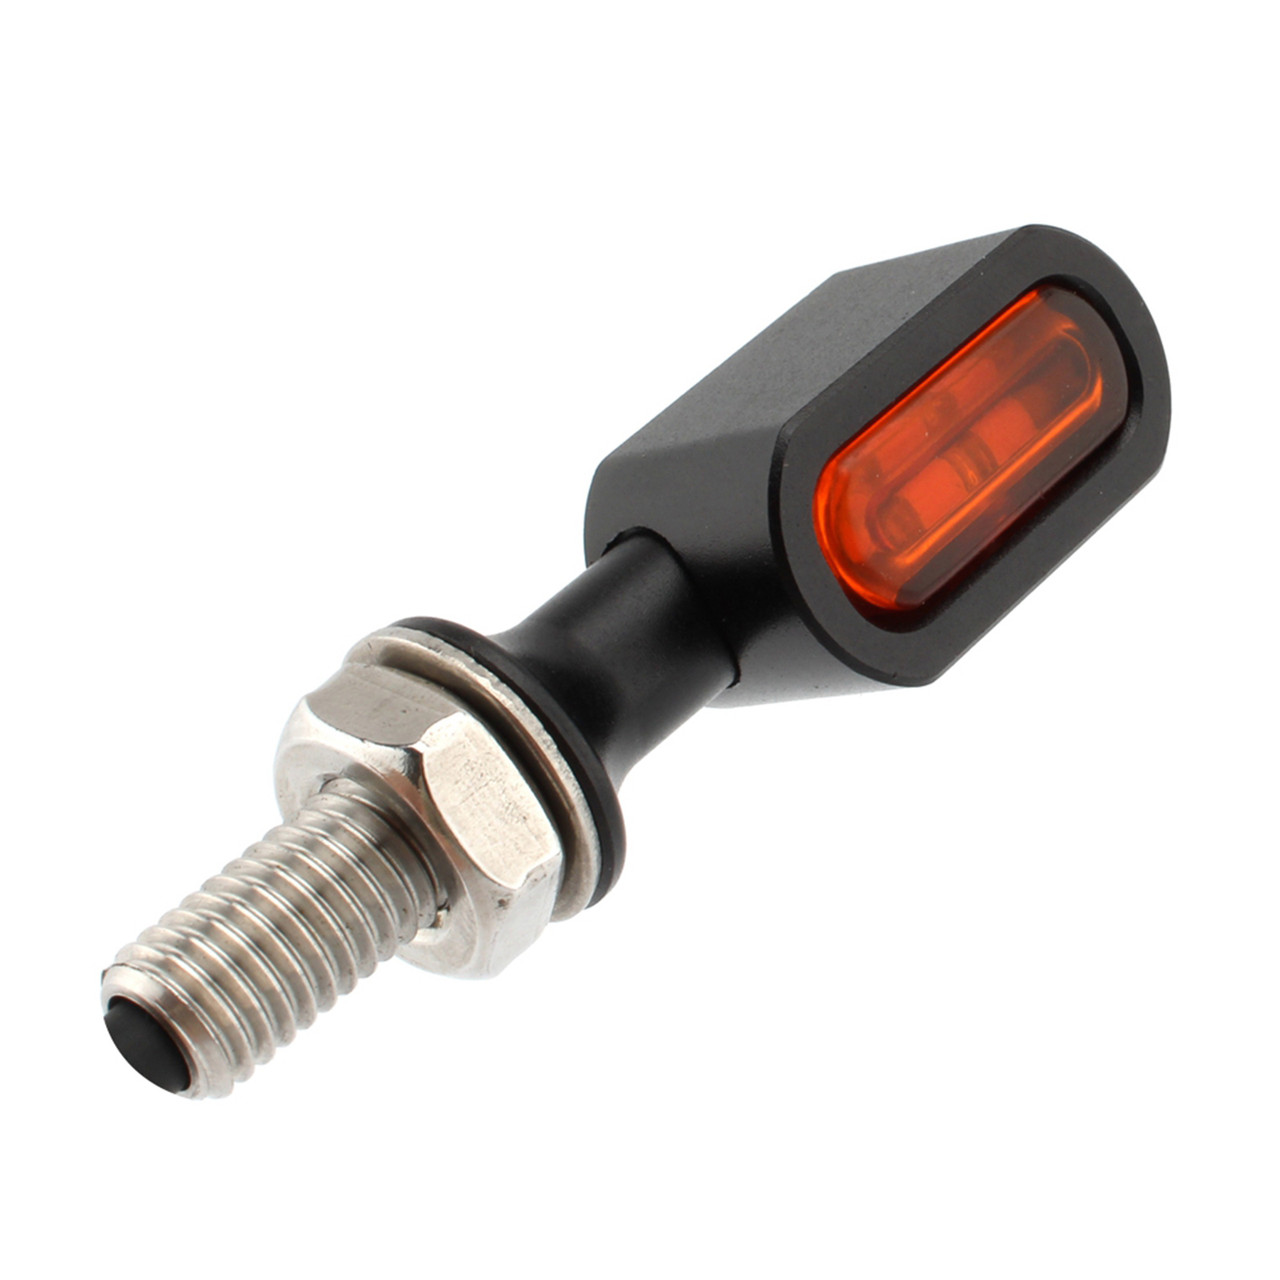 LED Rear Mini Turn Signal Indicator Light Fit for Harley motorcycles, chopper, cruiser, custom bikes BLKA